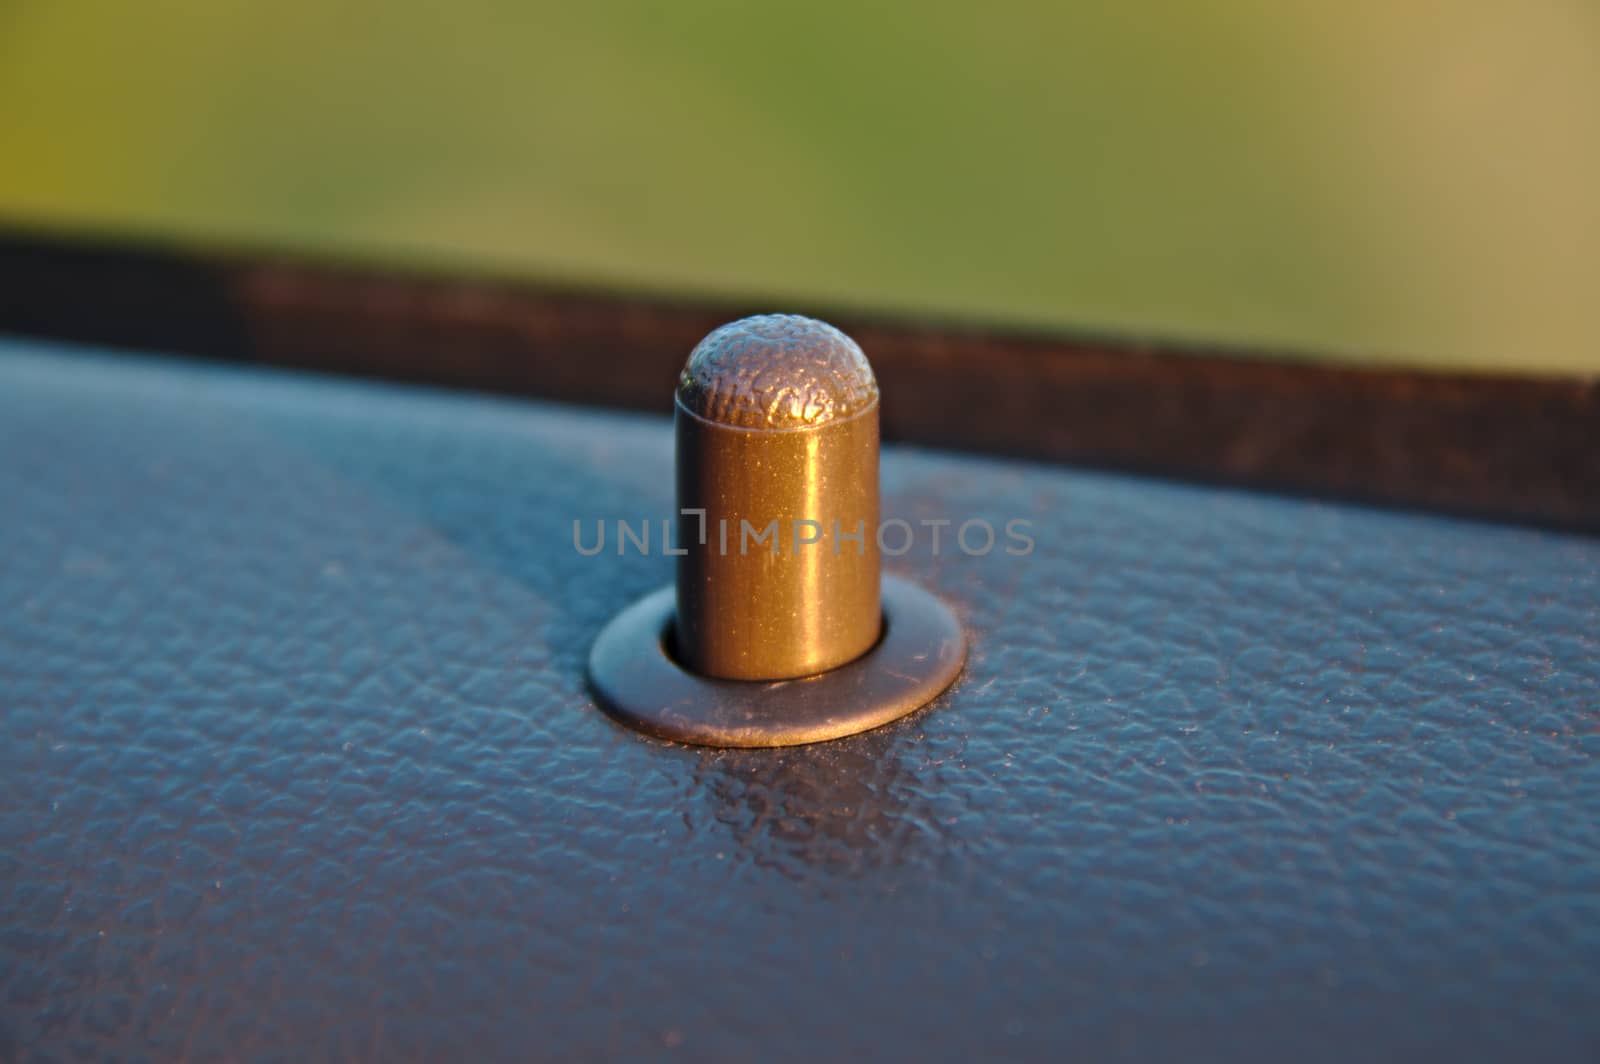 Door locking / unlocking knob of a car door.